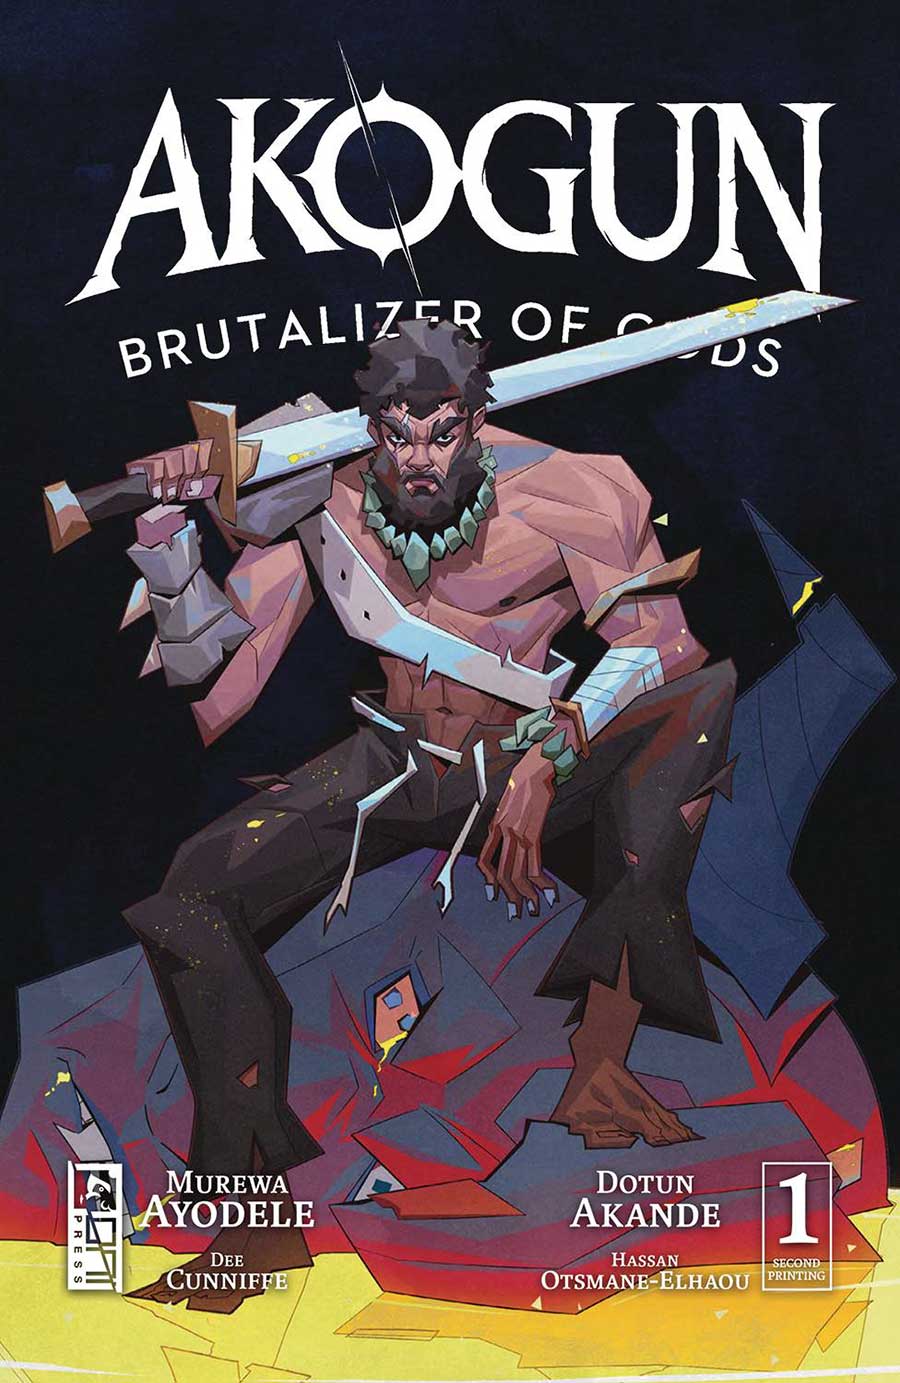 Akogun Brutalizer Of Gods #1 Cover F 2nd Ptg